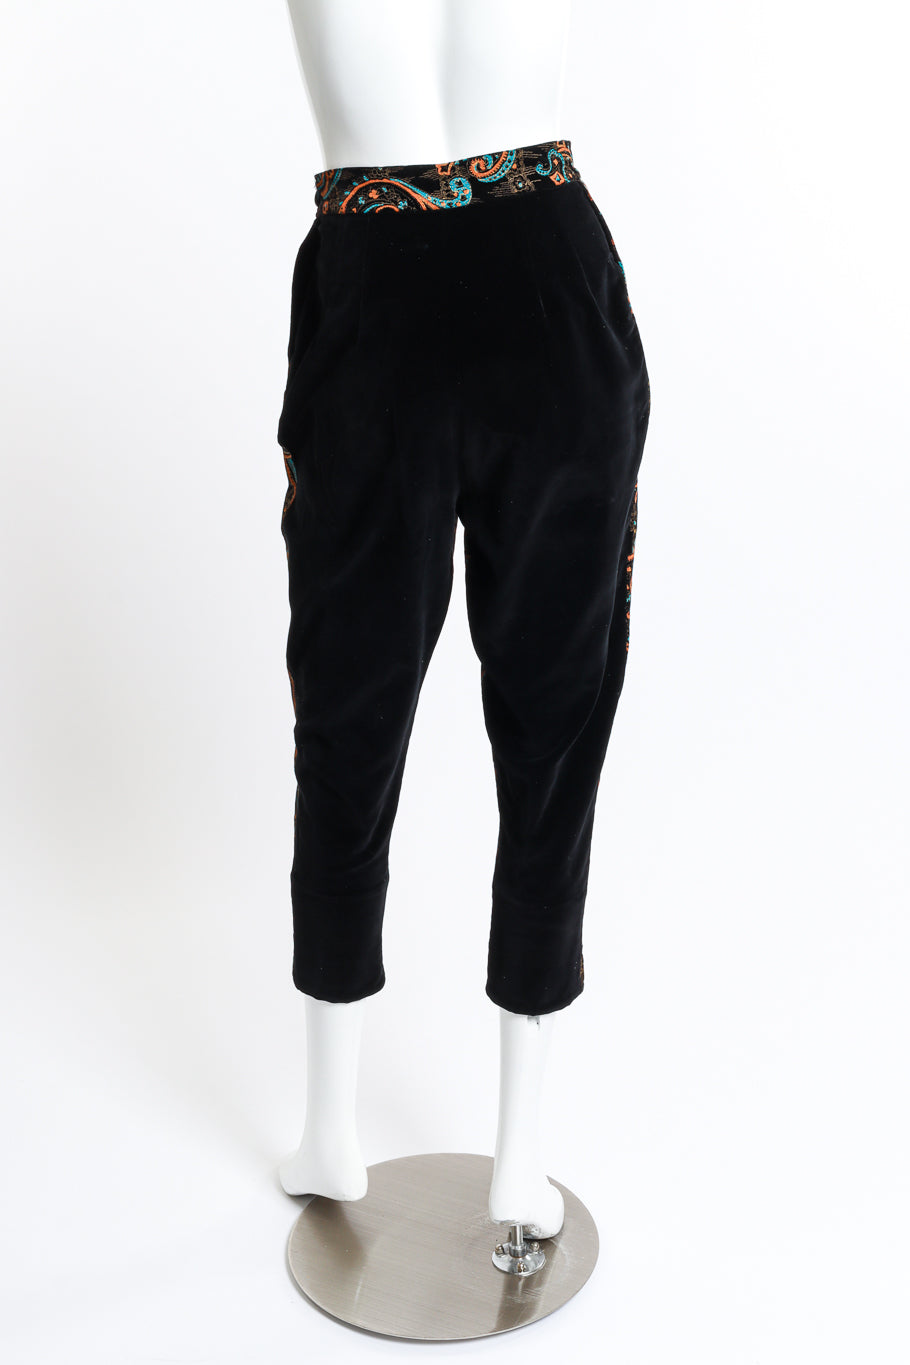 Paisley Pant Set by Dallas Sportswear pants back on mannequin @RECESS LA